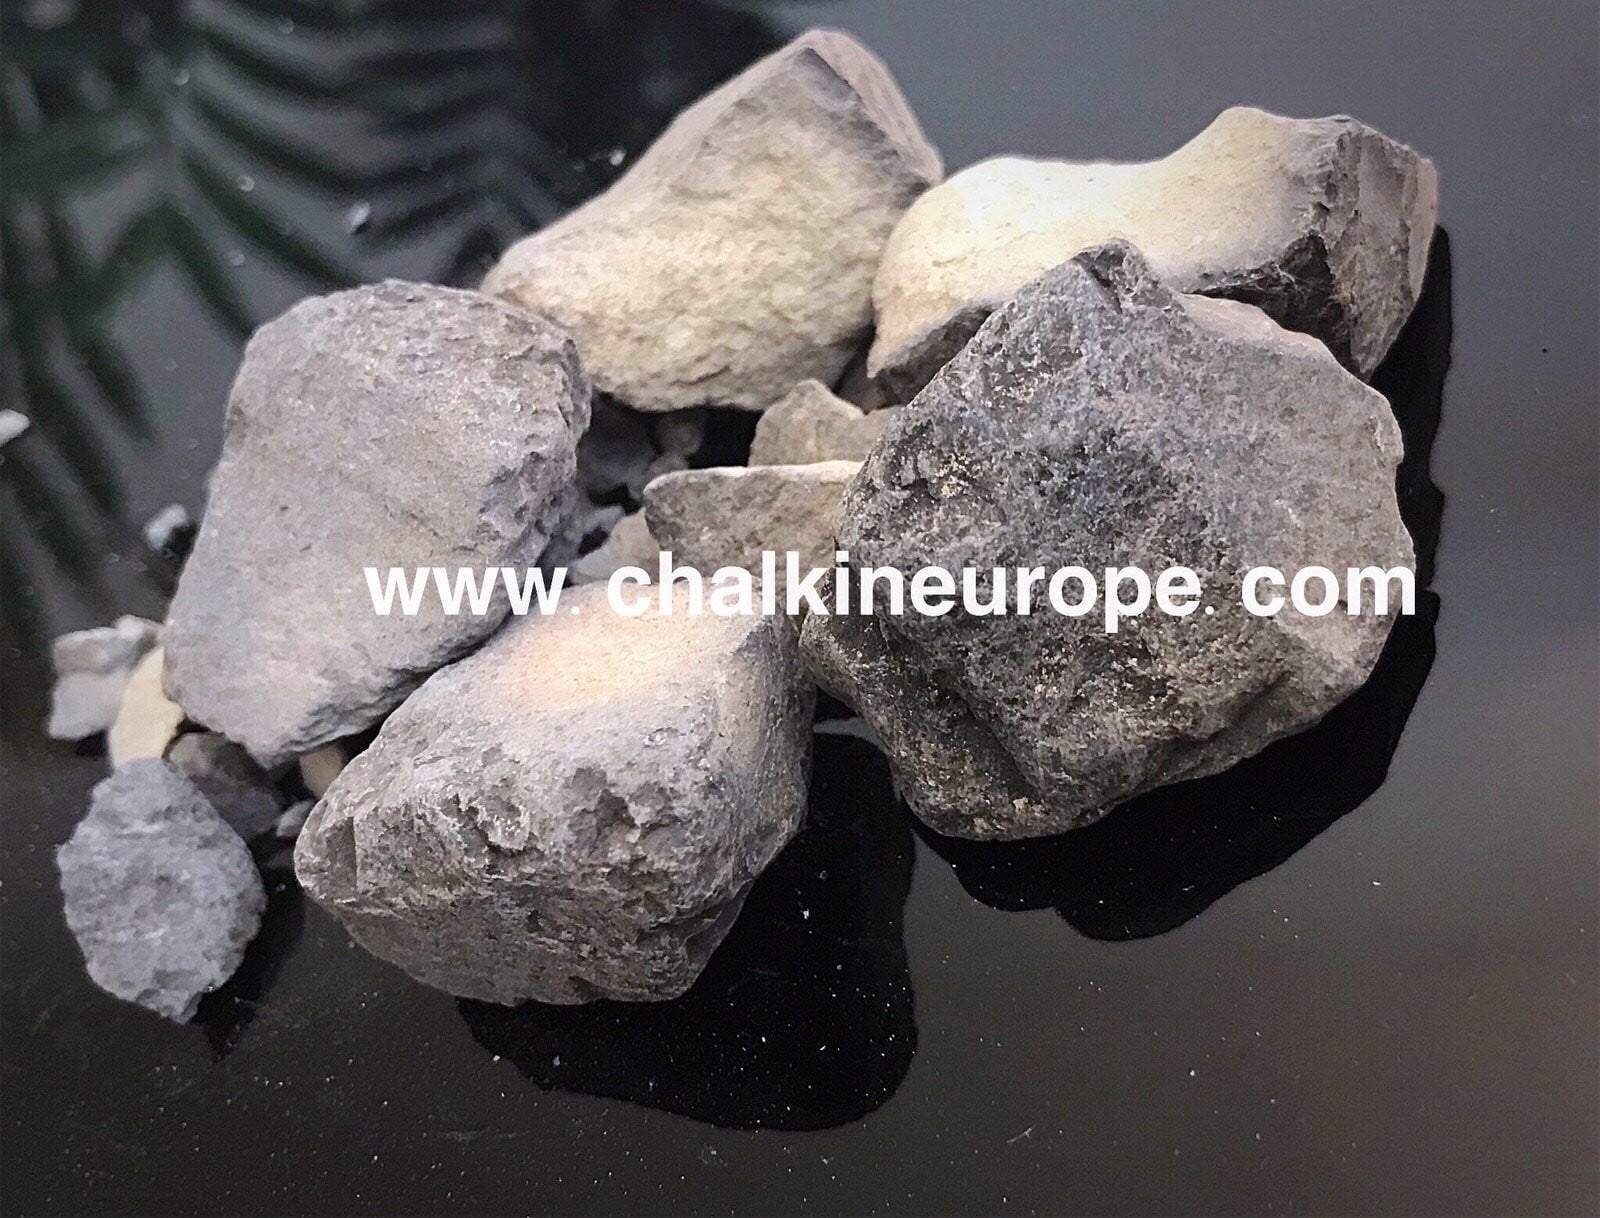 Blackhall Clay | Grauzdēts melnais māls - Chalkineurope